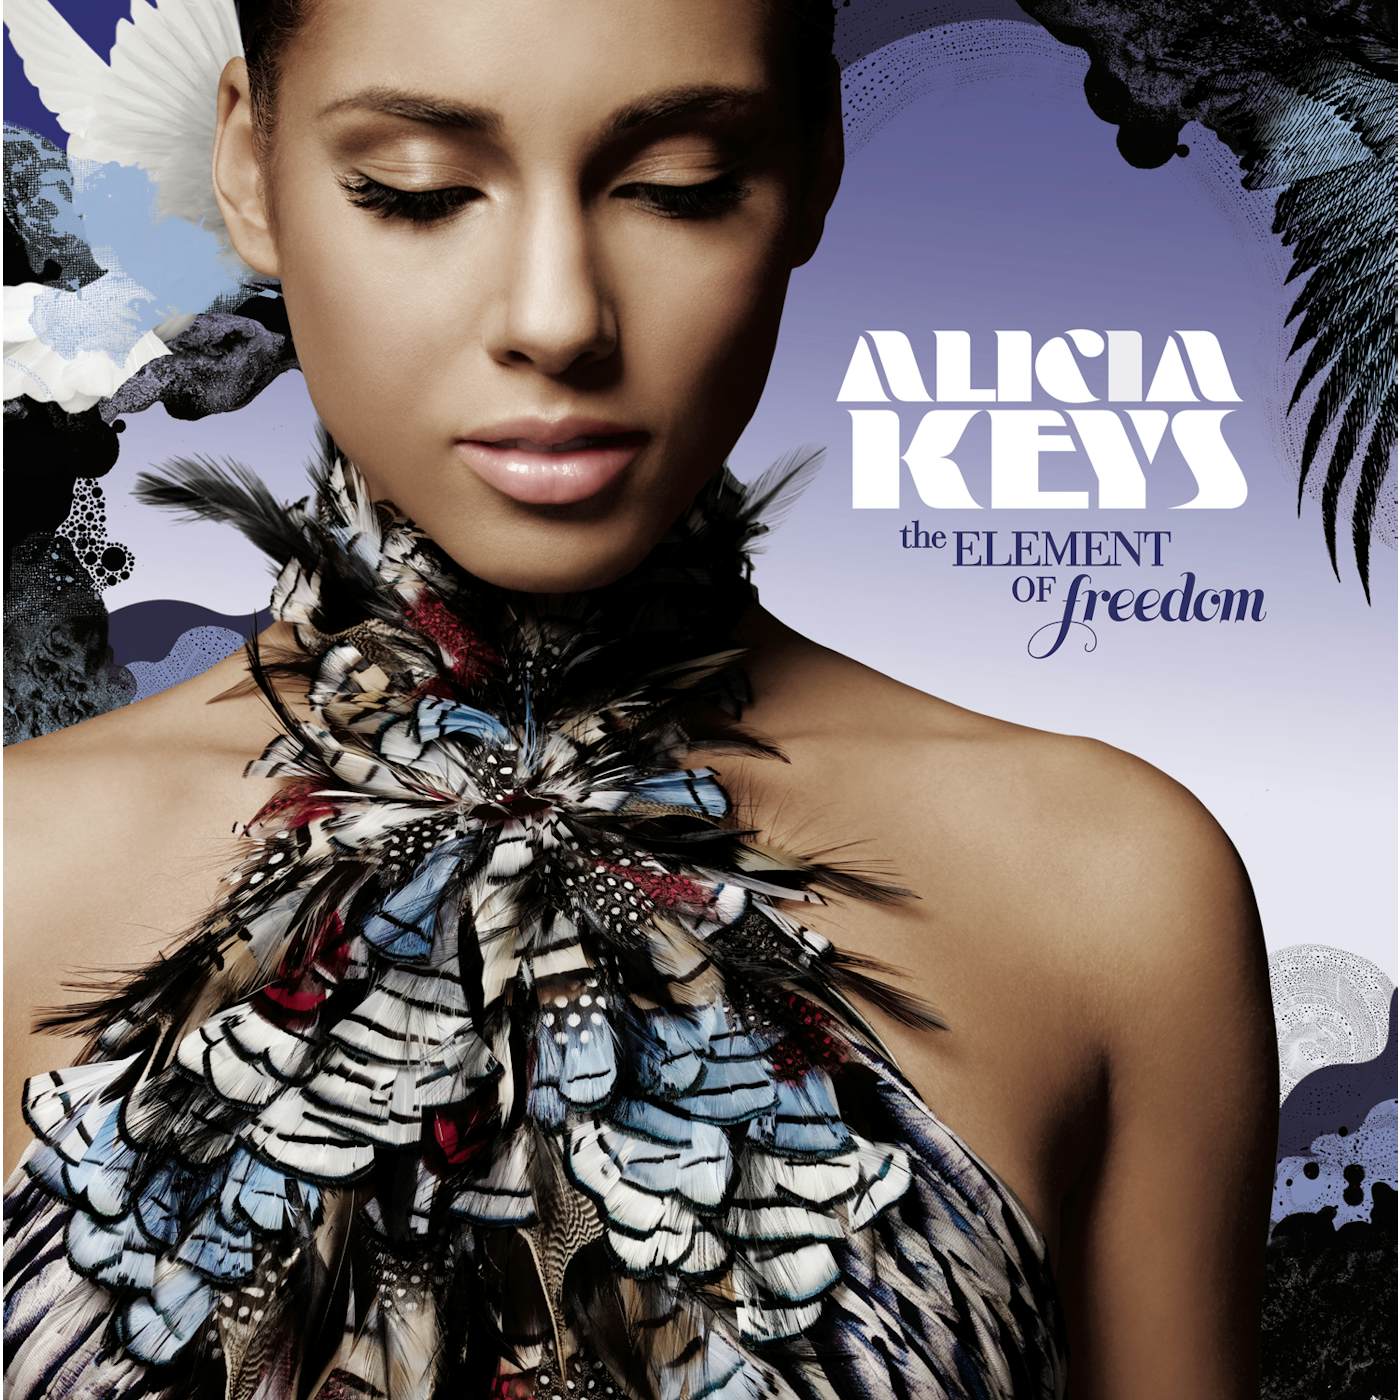 Alicia Keys ELEMENT OF FREEDOM CD